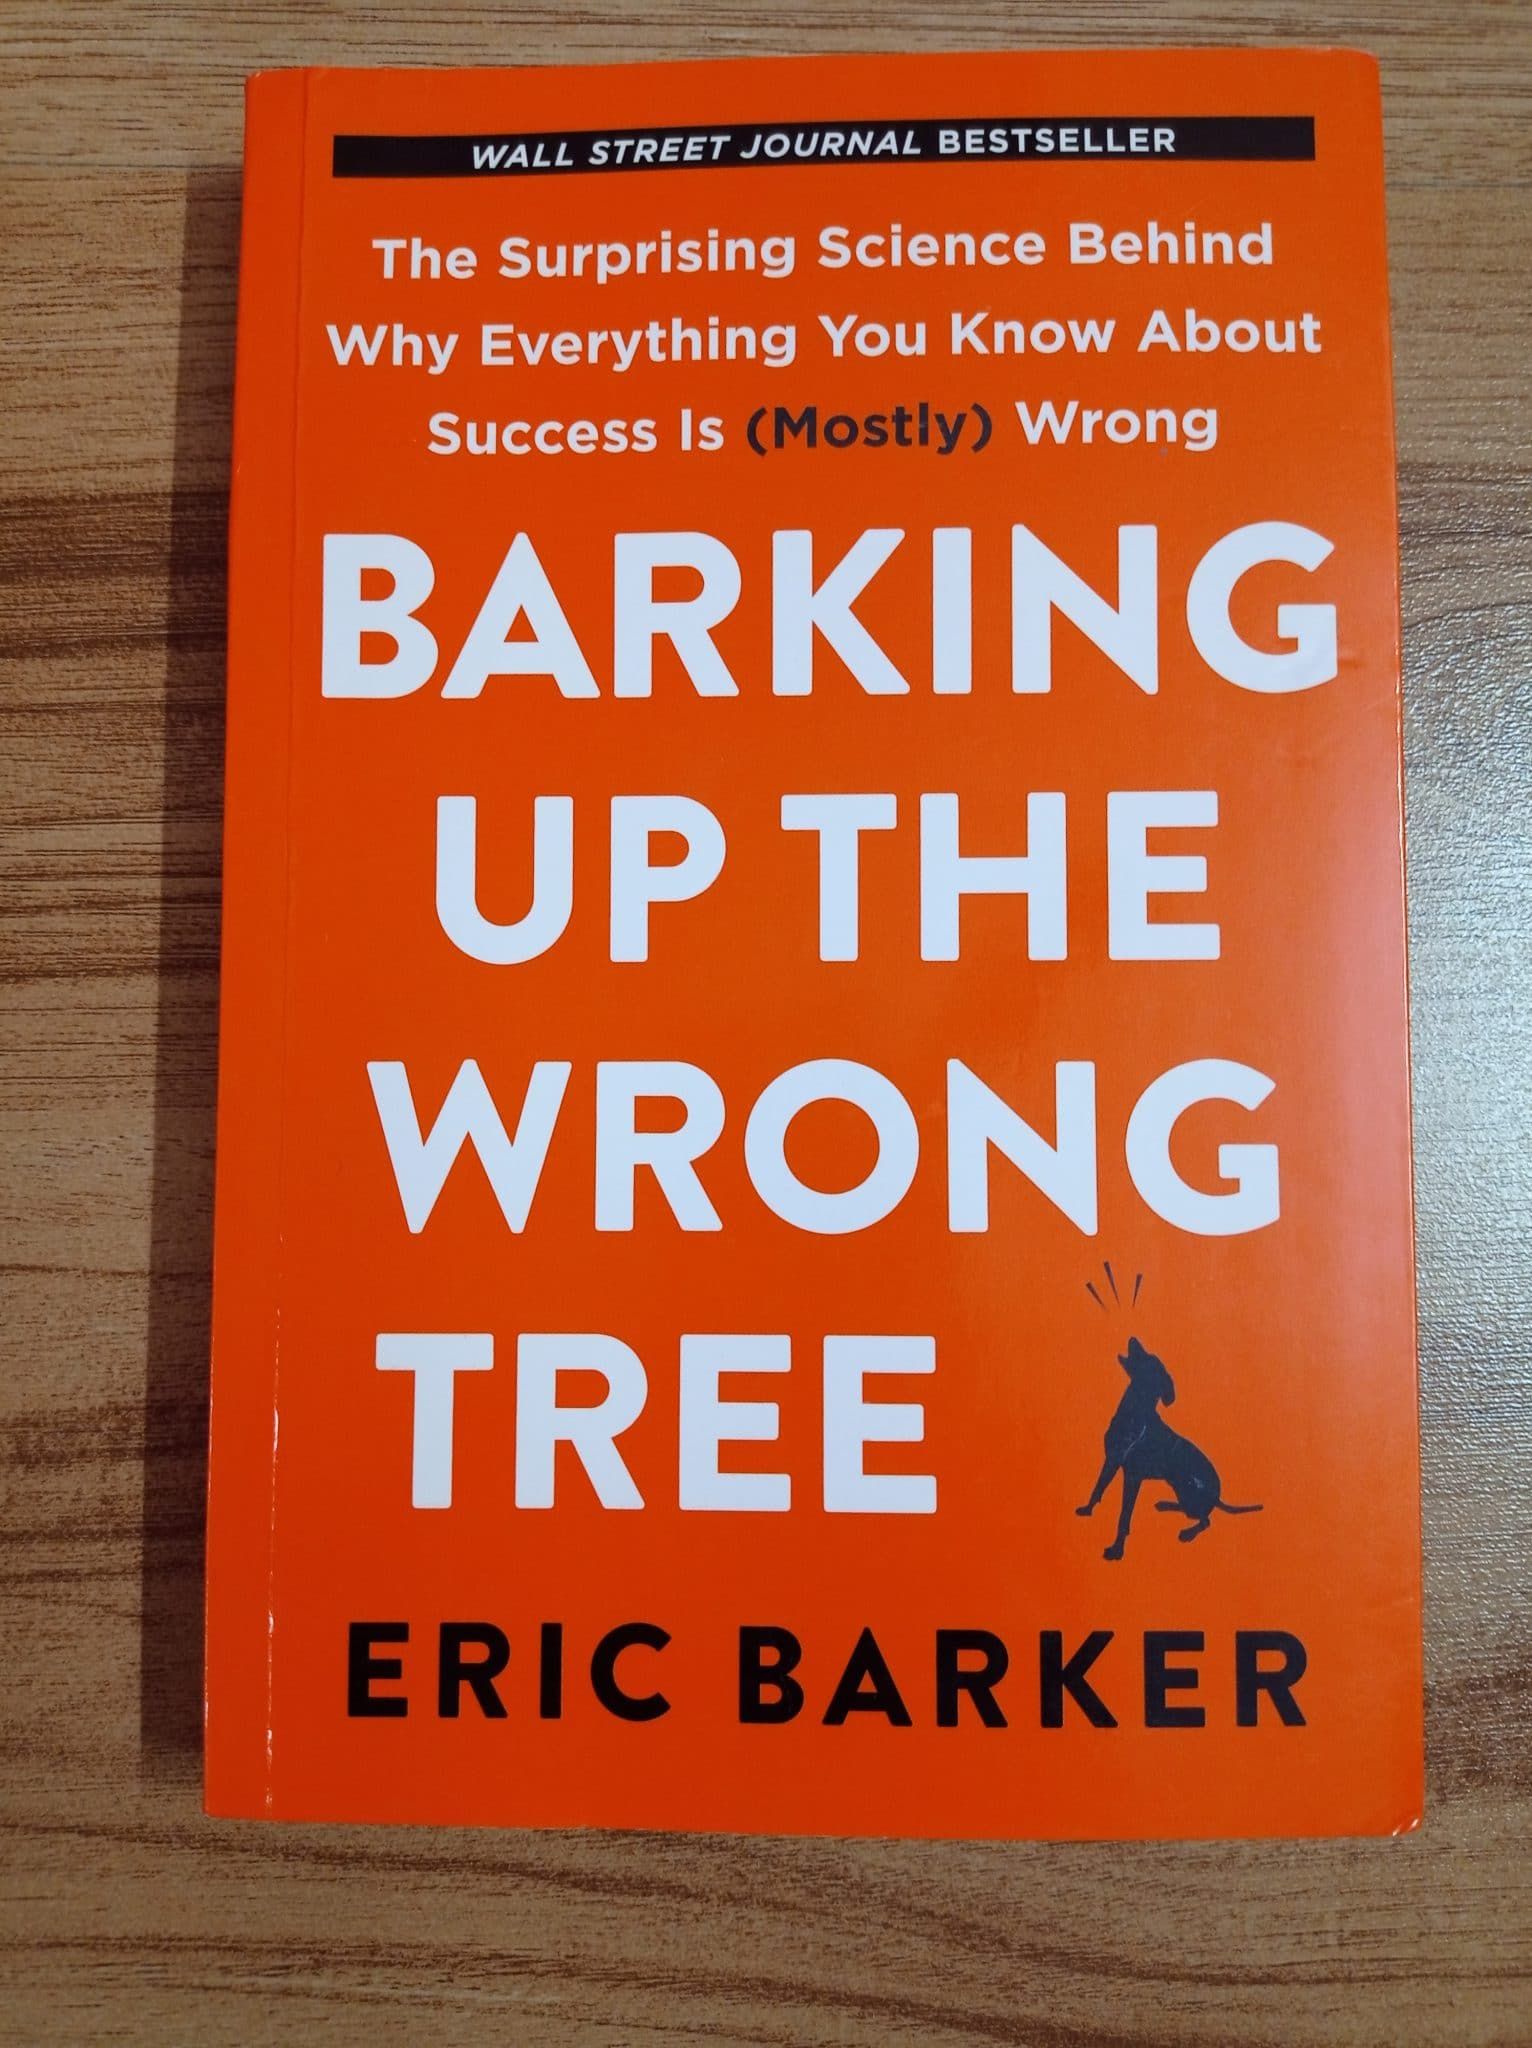 Barking up the wrong tree 1